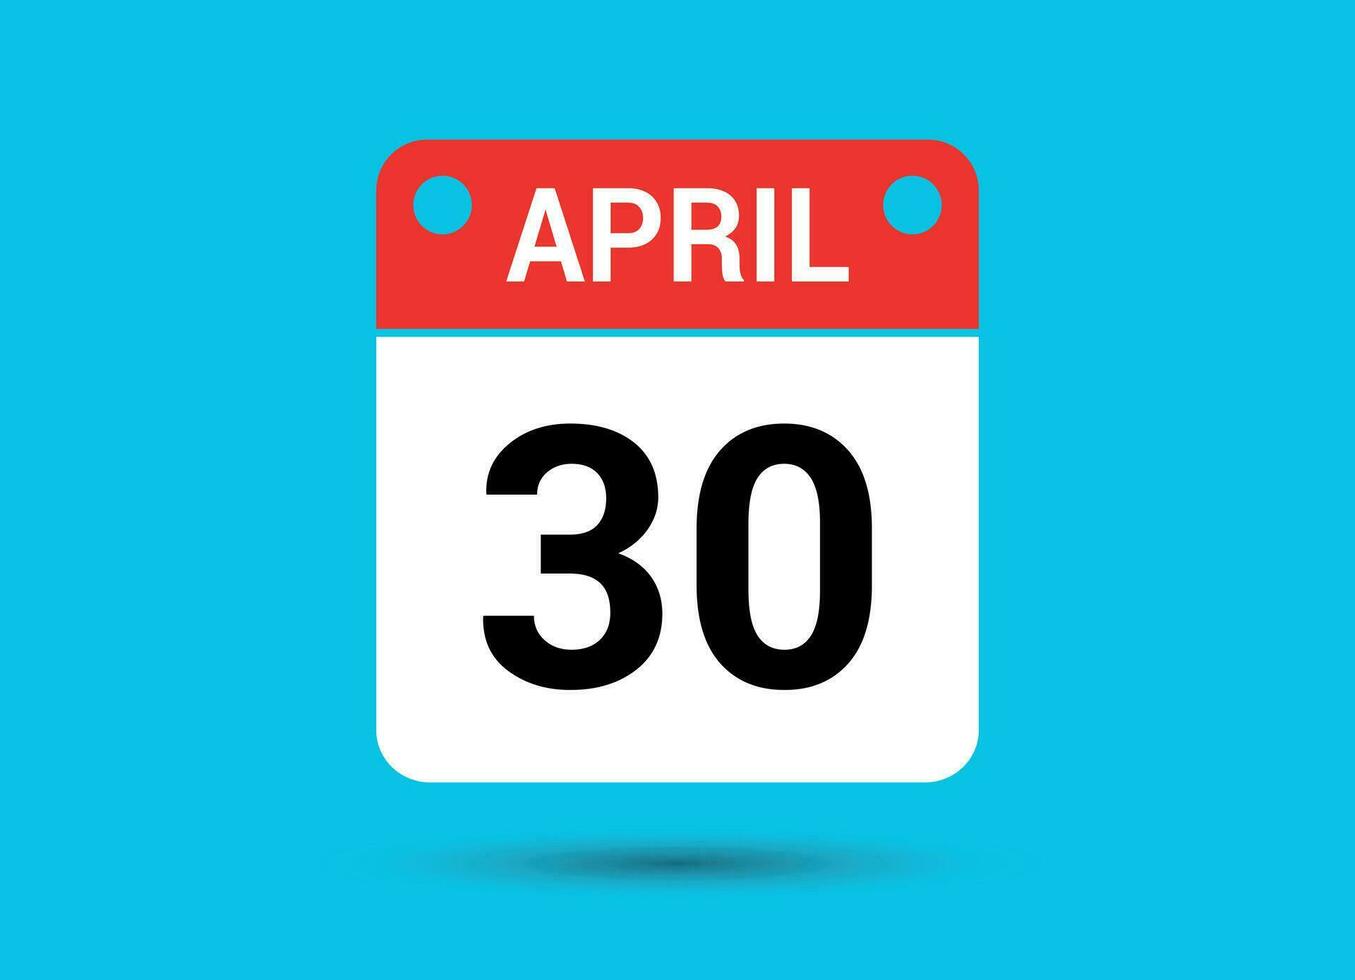 April 30 Kalender Datum eben Symbol Tag 30 Vektor Illustration